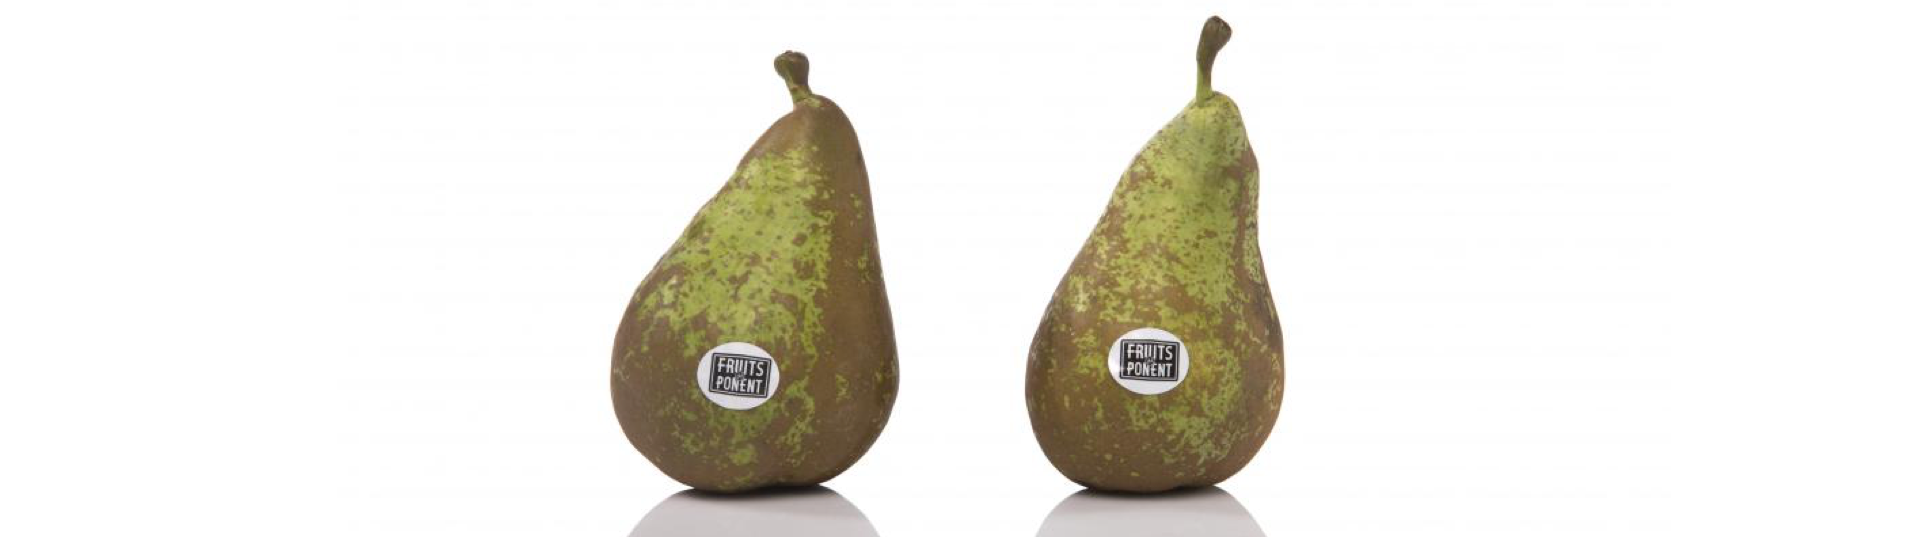 FDP Conference pear